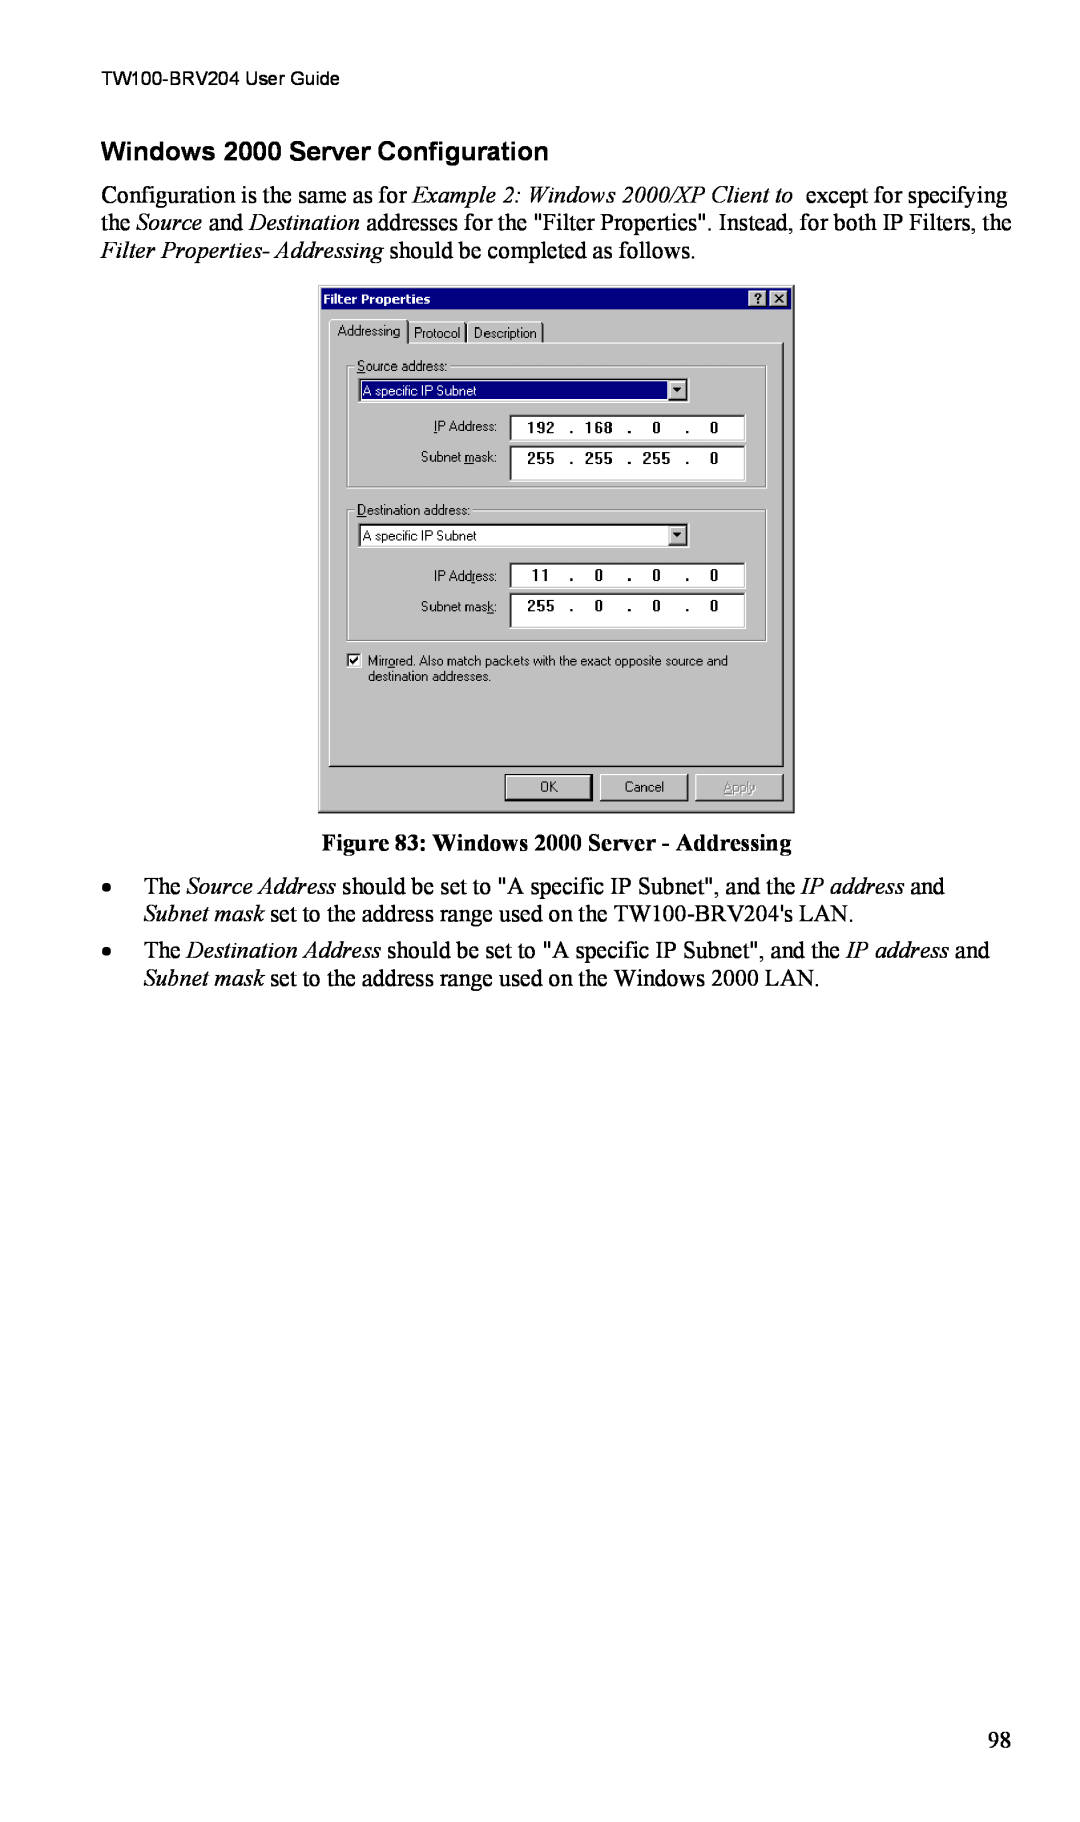 TRENDnet VPN Firewall Router, TW100-BRV204 manual Windows 2000 Server Configuration, Windows 2000 Server - Addressing 